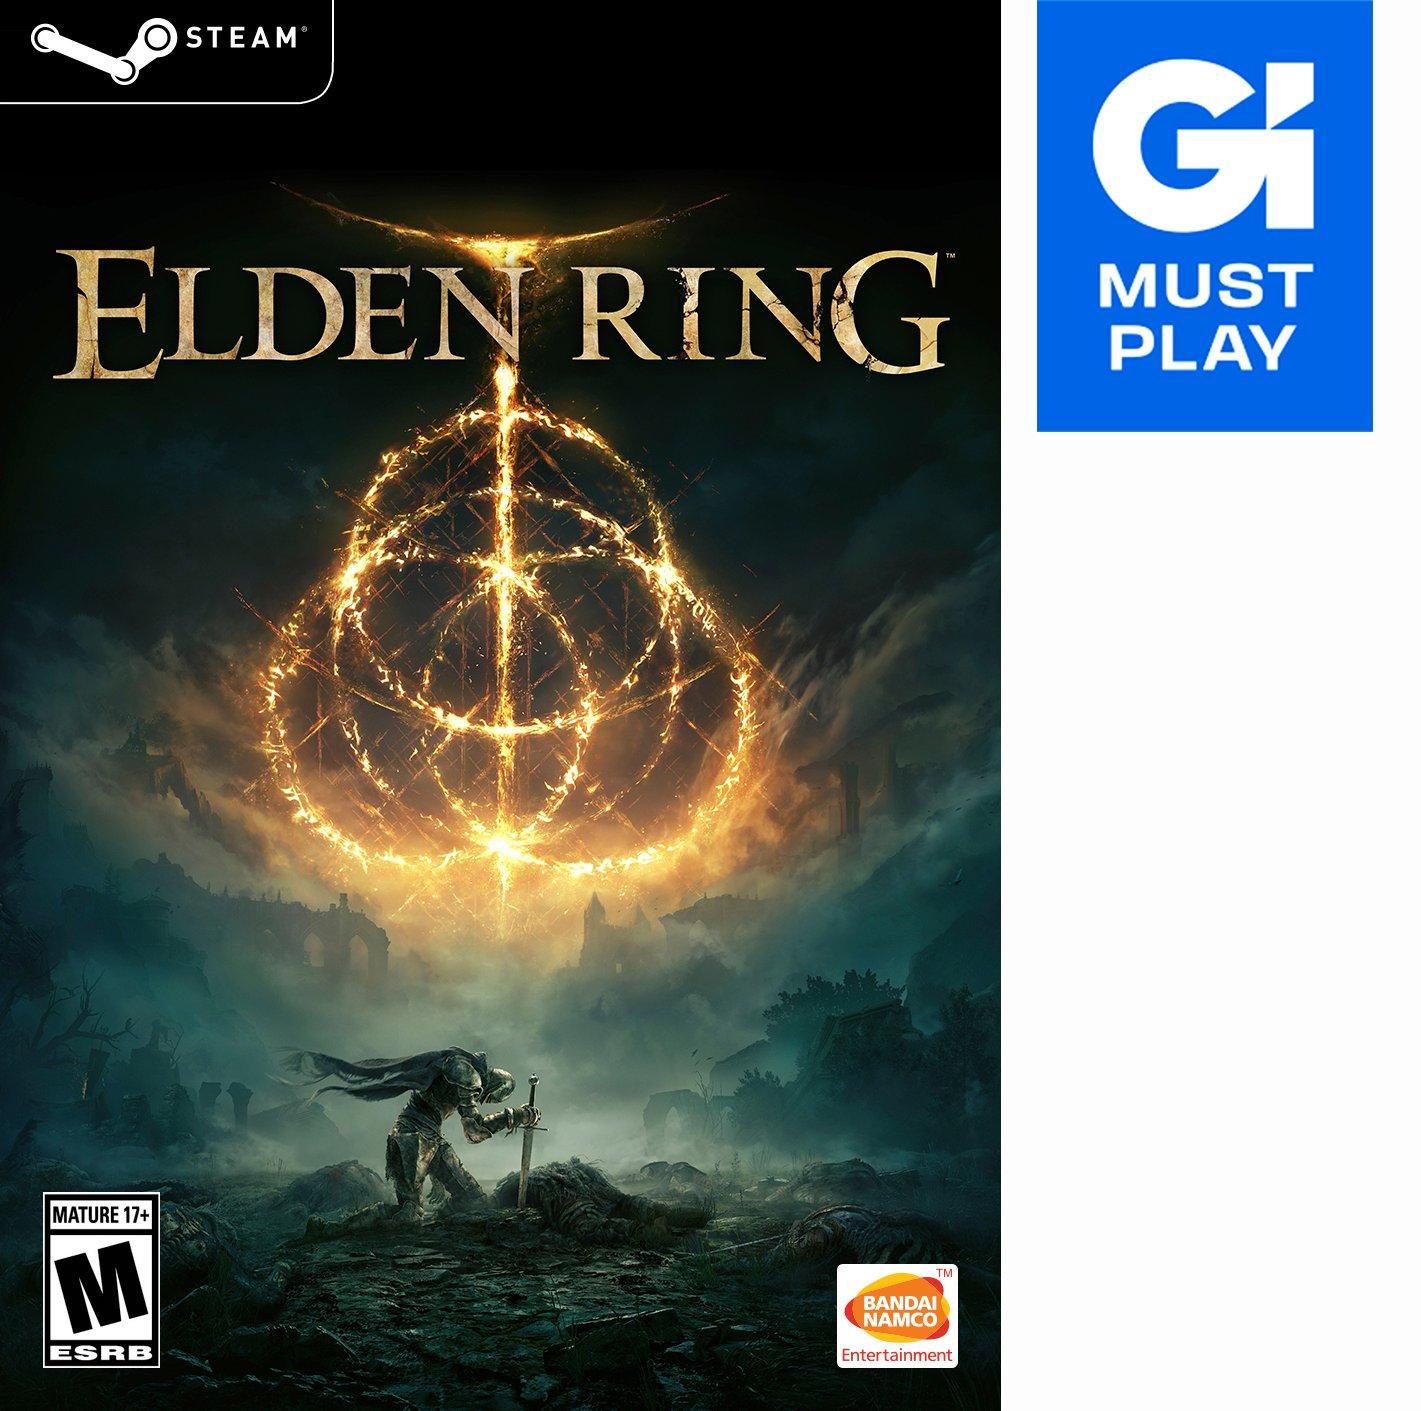 Elden Ring On AMD FX 6300 + GTX 1060 6GB